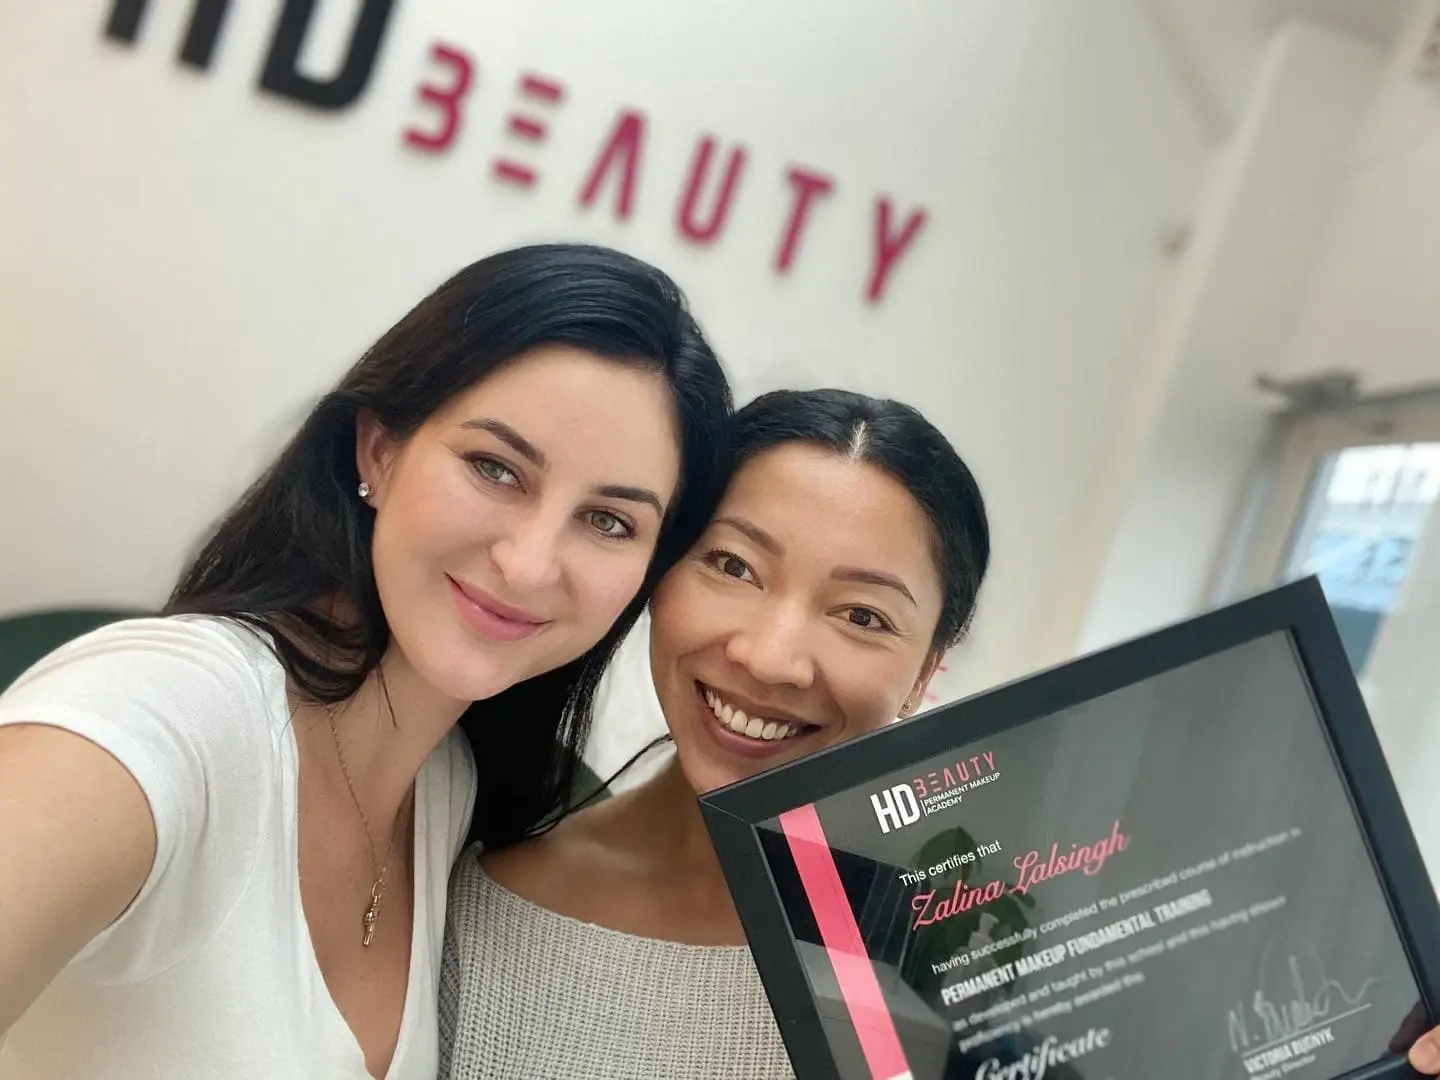 HD Beauty Permanent Makeup Academy